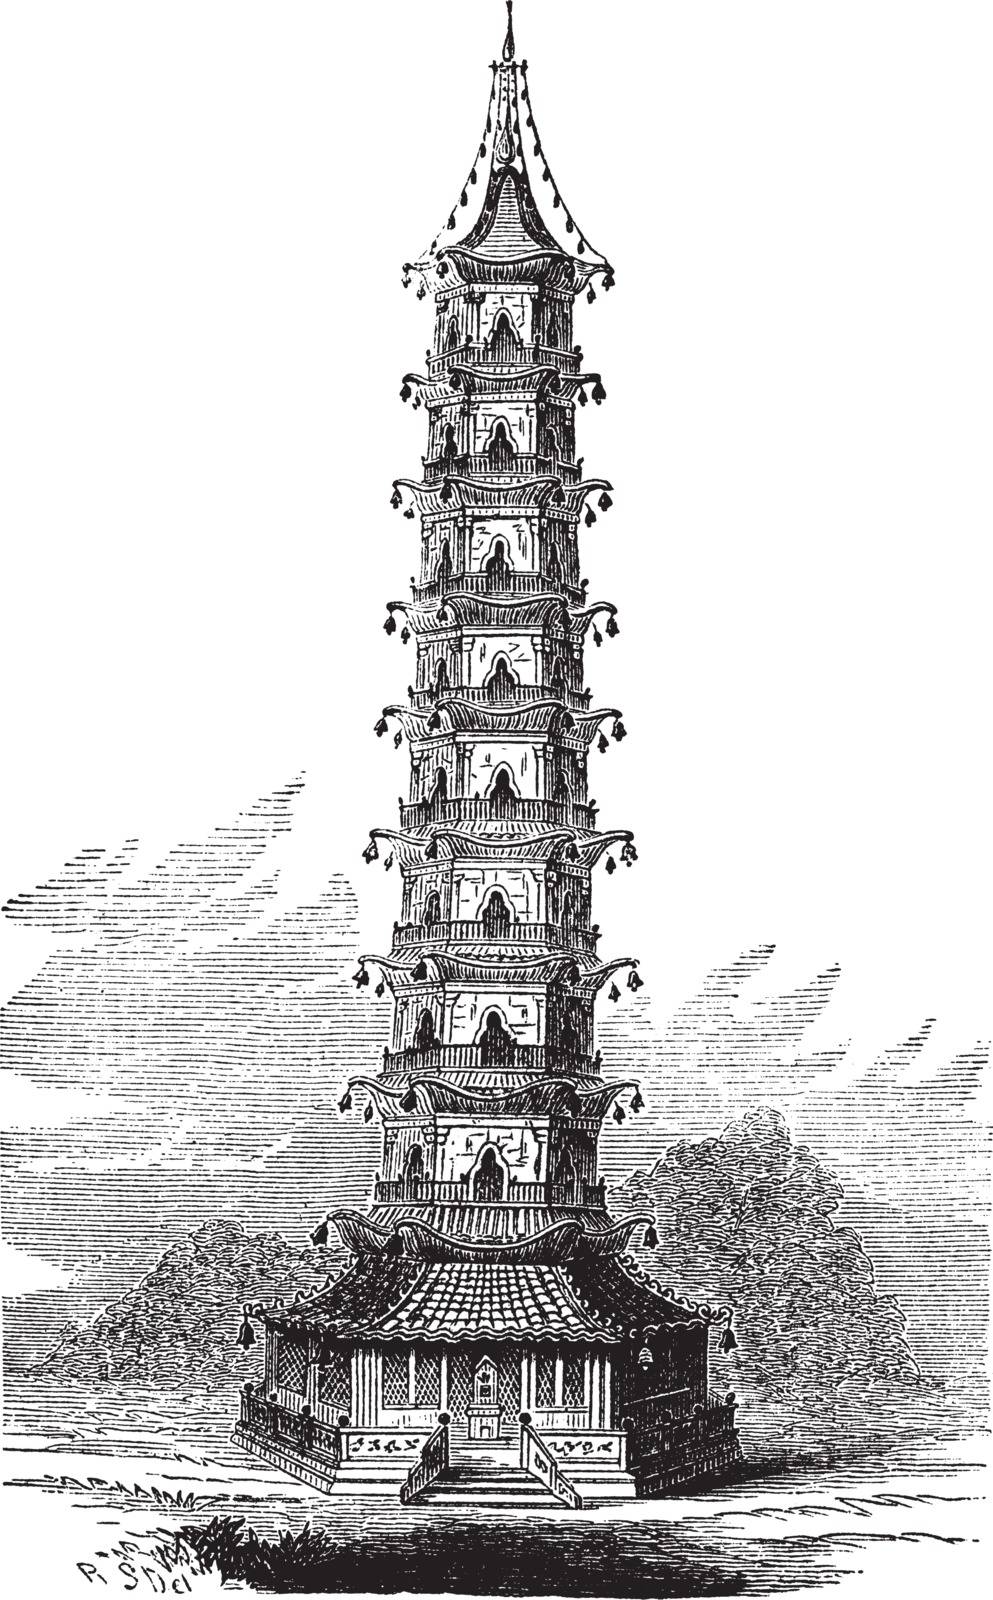 Porcelain Tower of Nanjing, in China, vintage engraved illustration. Trousset encyclopedia (1886 - 1891).